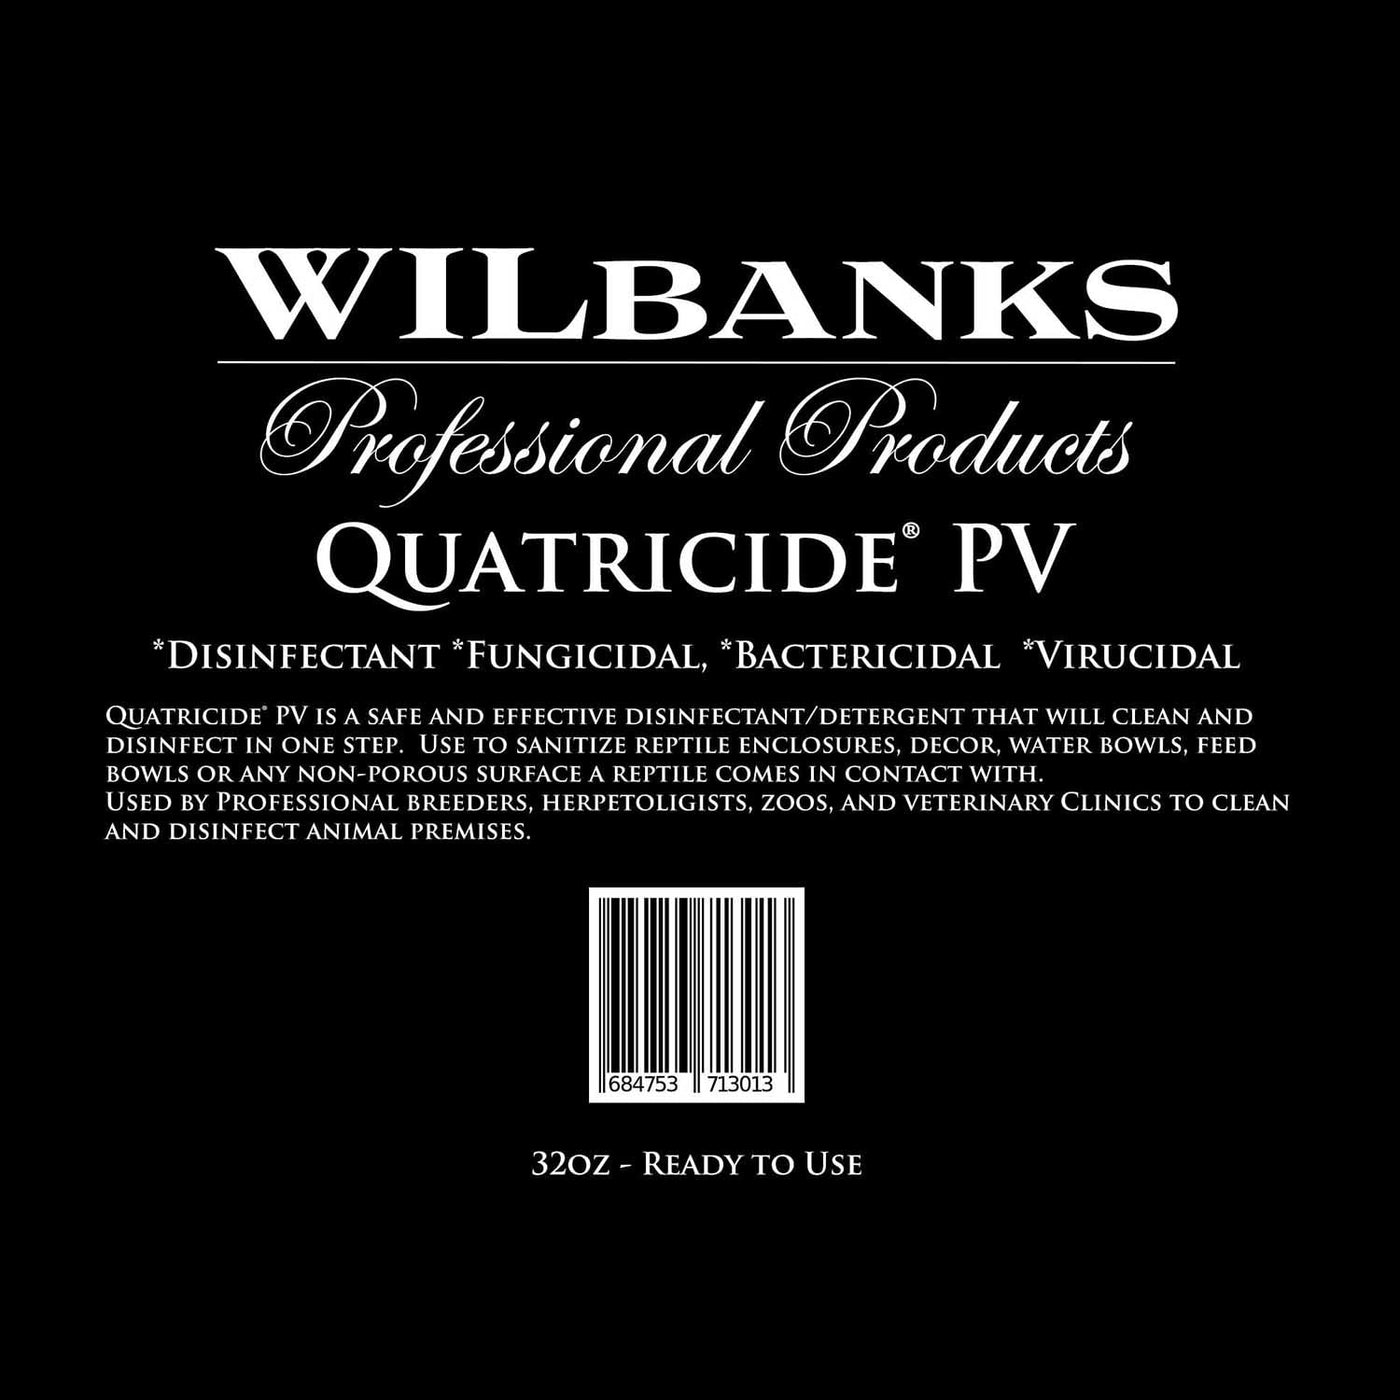 Quatricide PV Disinfectant - Wilbanks Professional